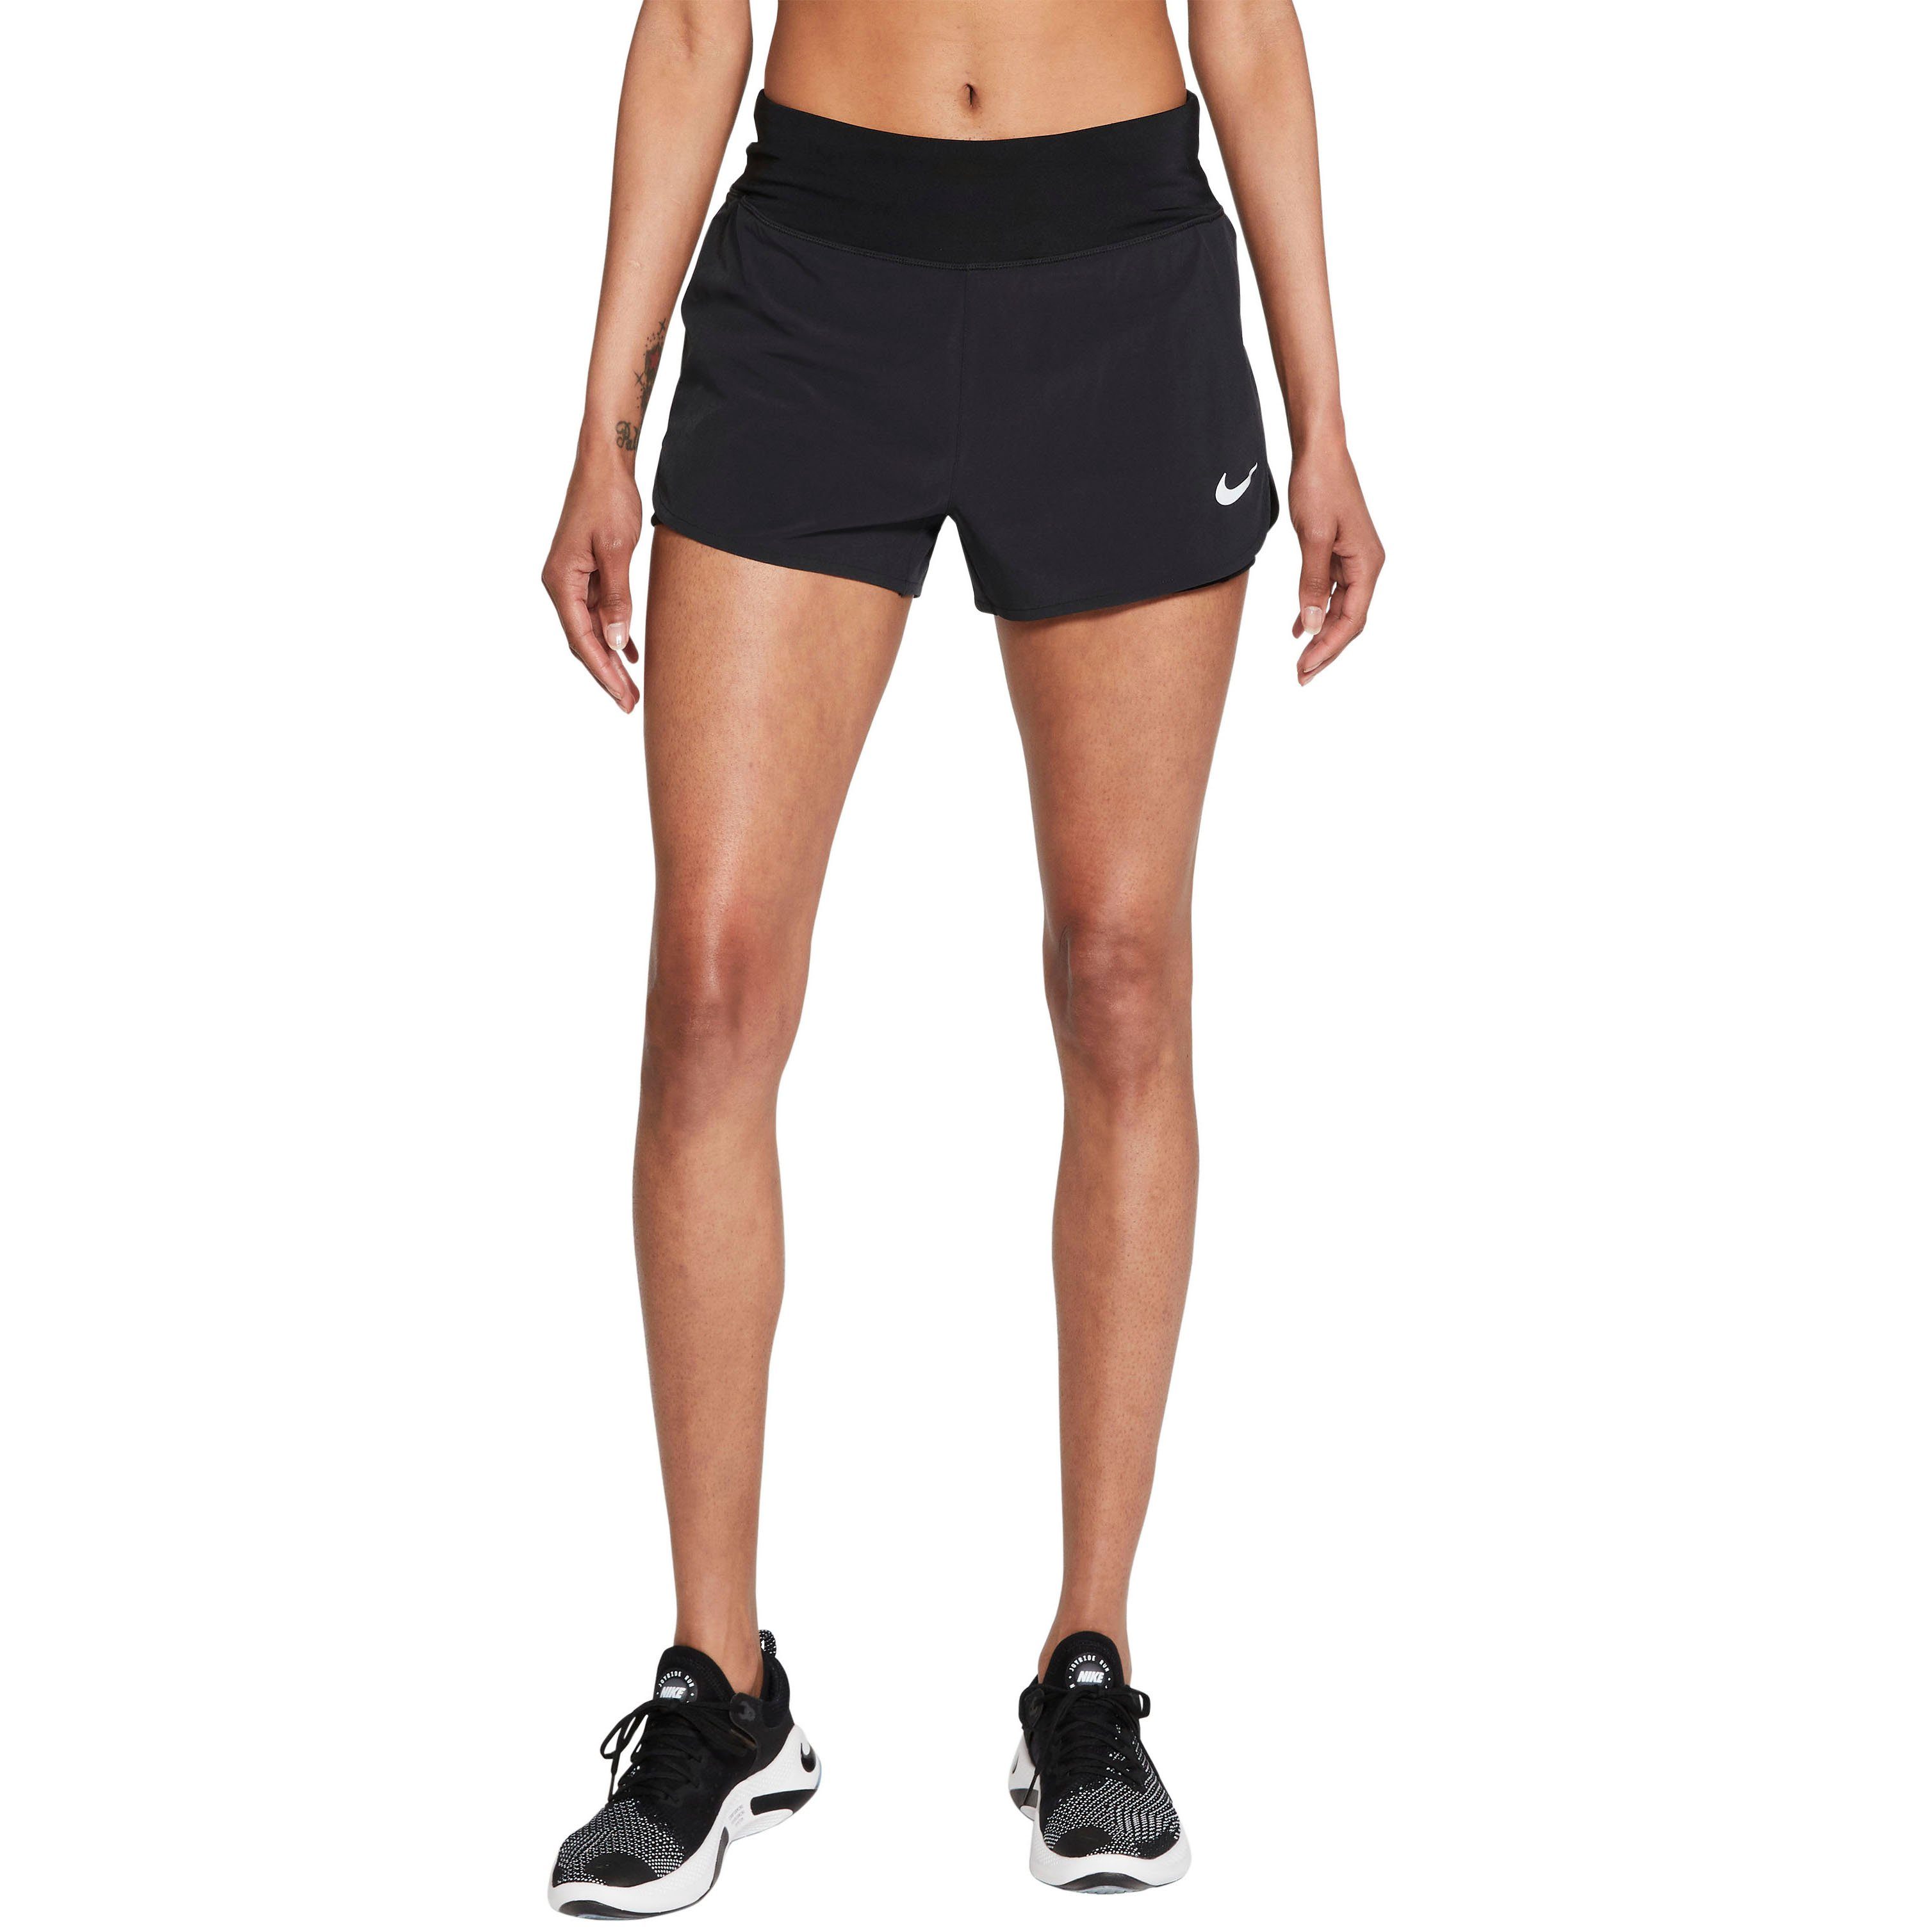 Nike Laufshorts Nike Eclipse Women's 2-in-1 Running Шорты